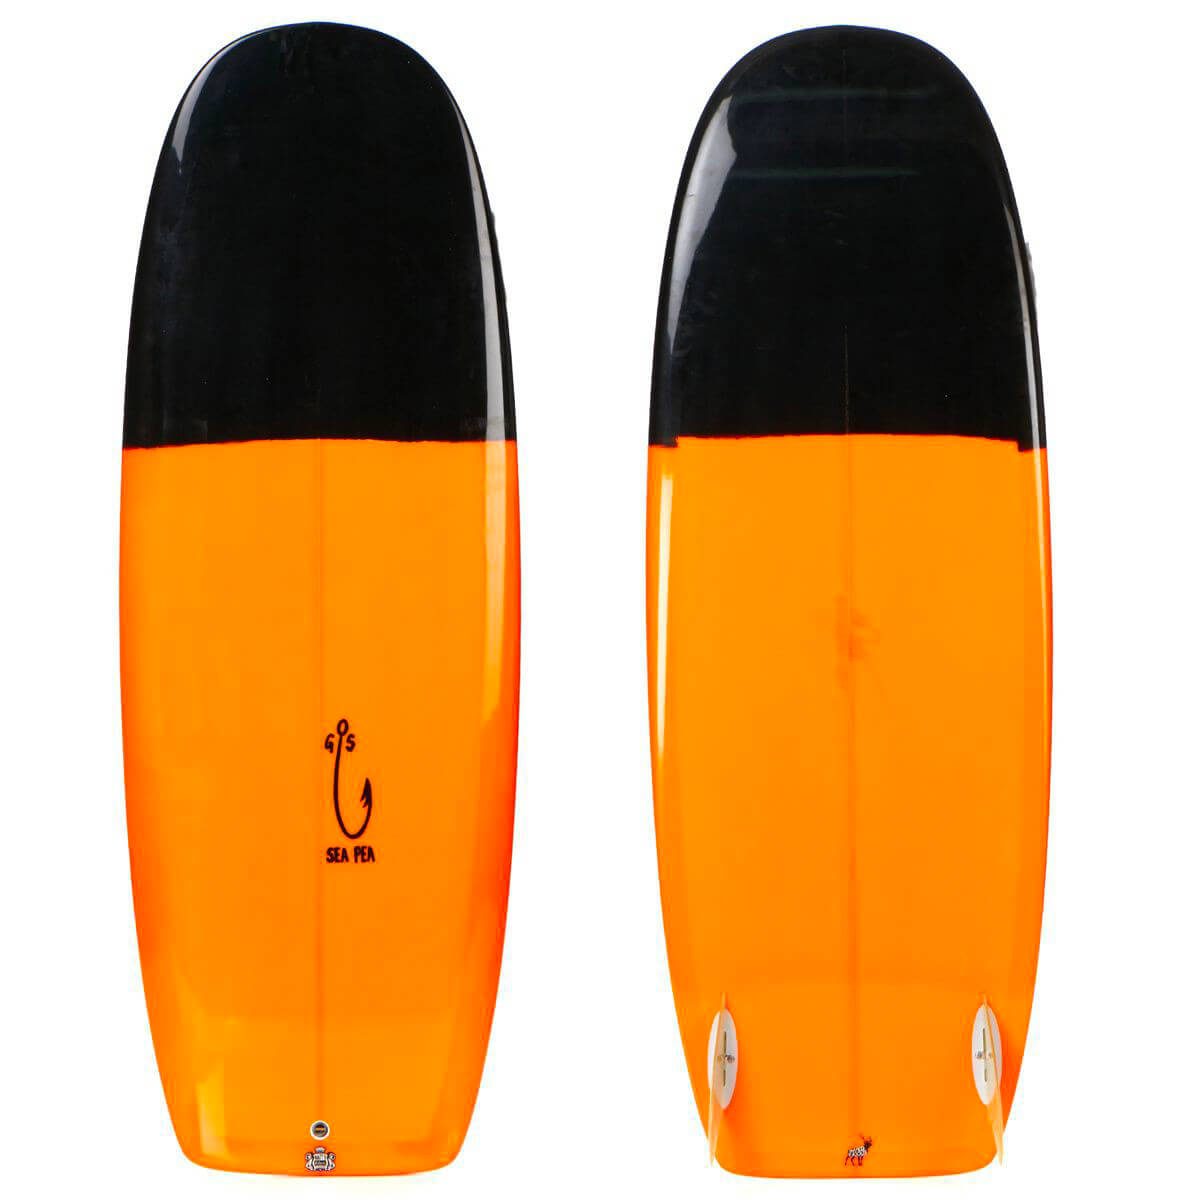 gulf-stream-surfboards-gulf-stream-sea-pea-surfboard-dipped-tint-polish